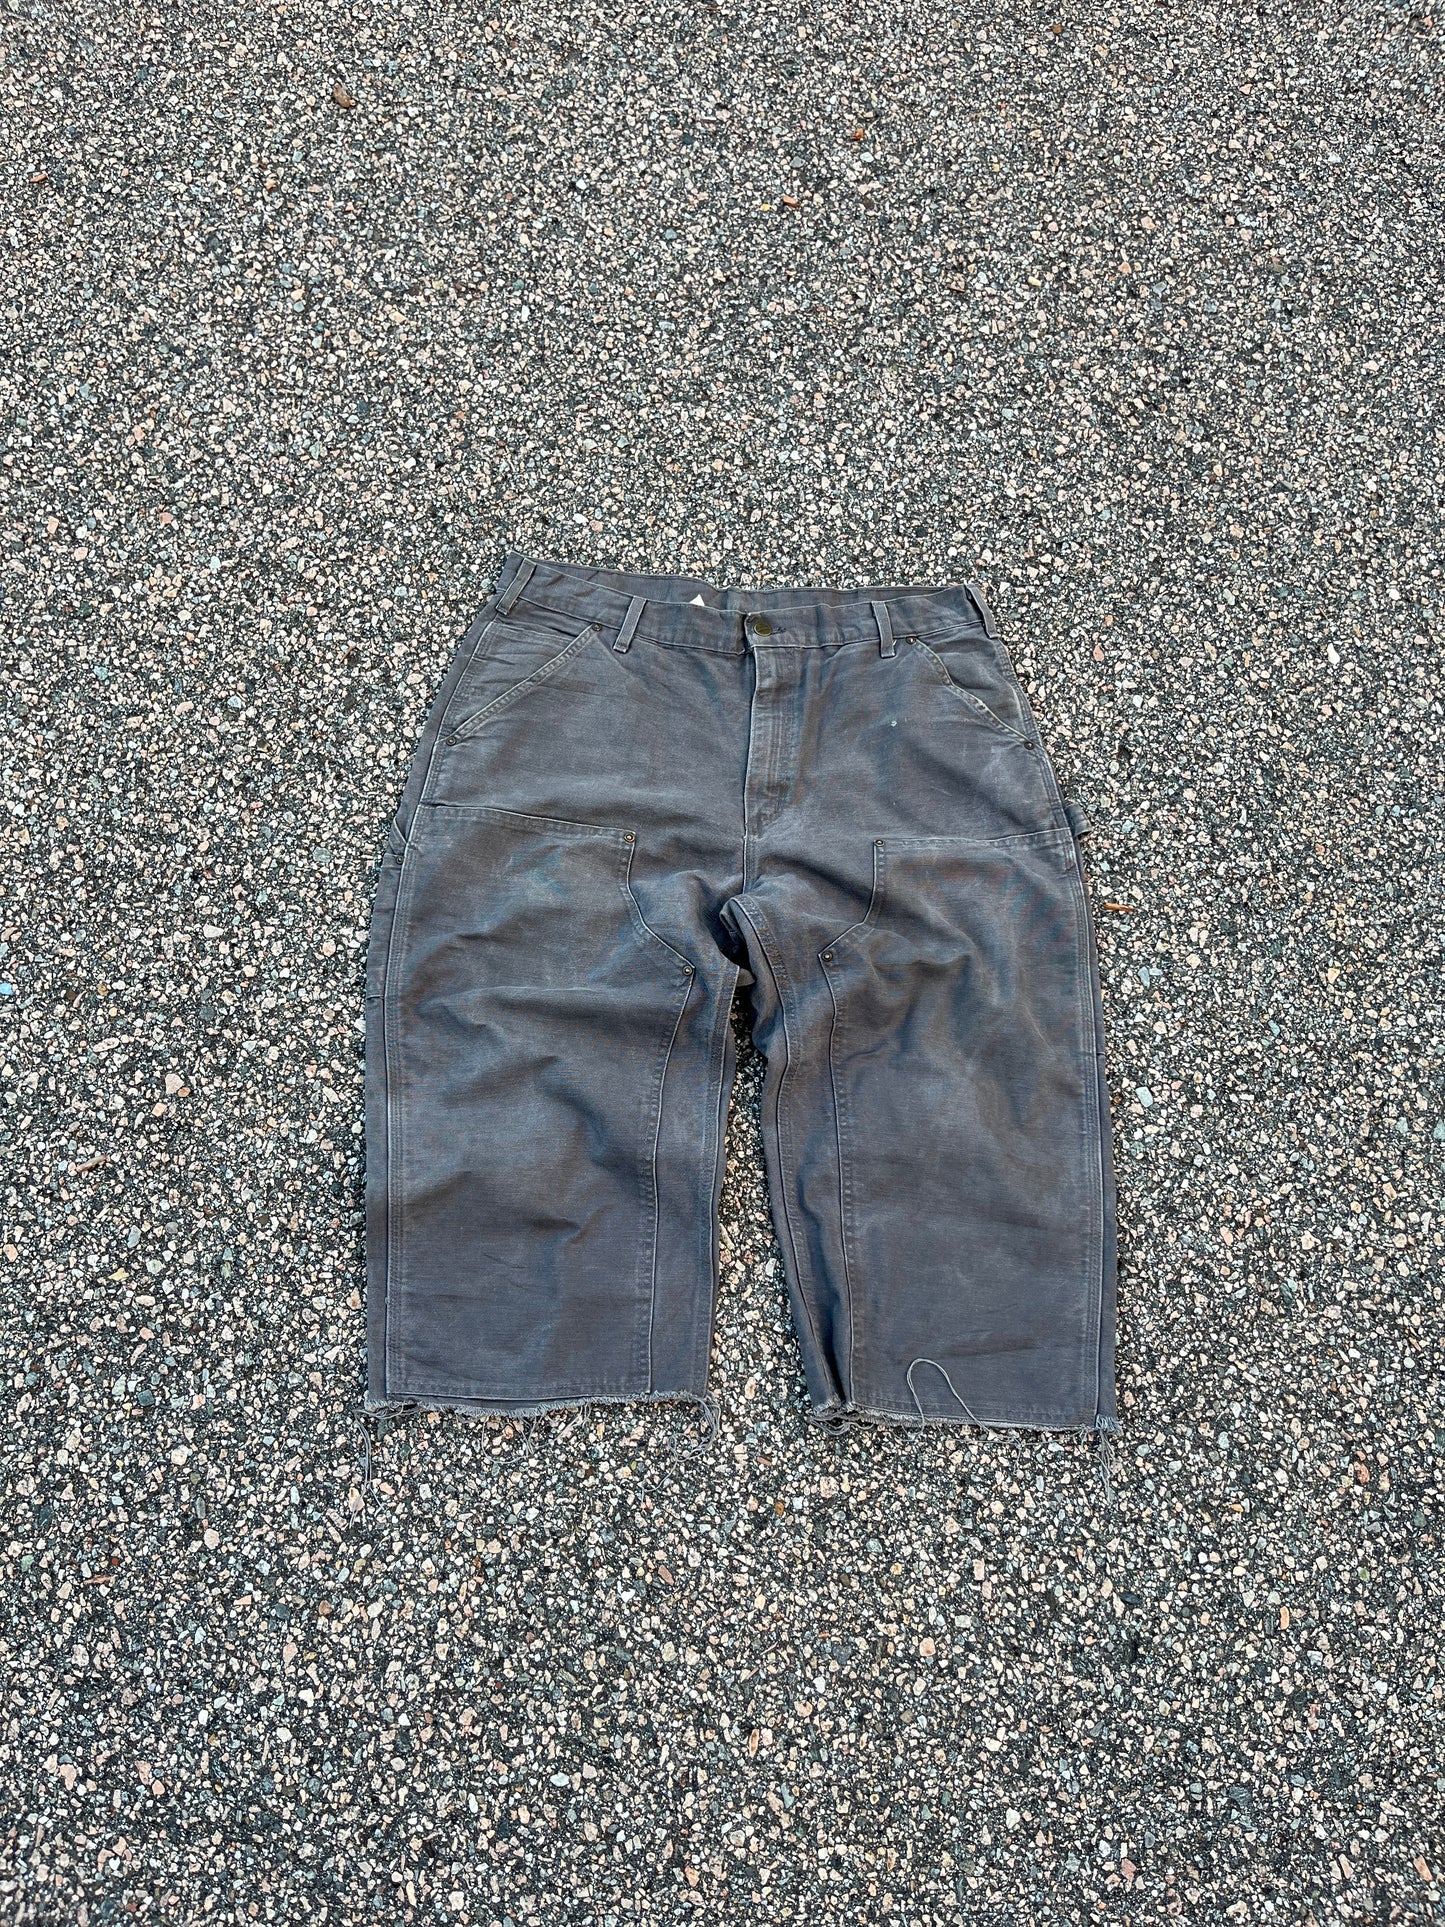 Faded Grey Carhartt Double Knee Pants - 36 x 19